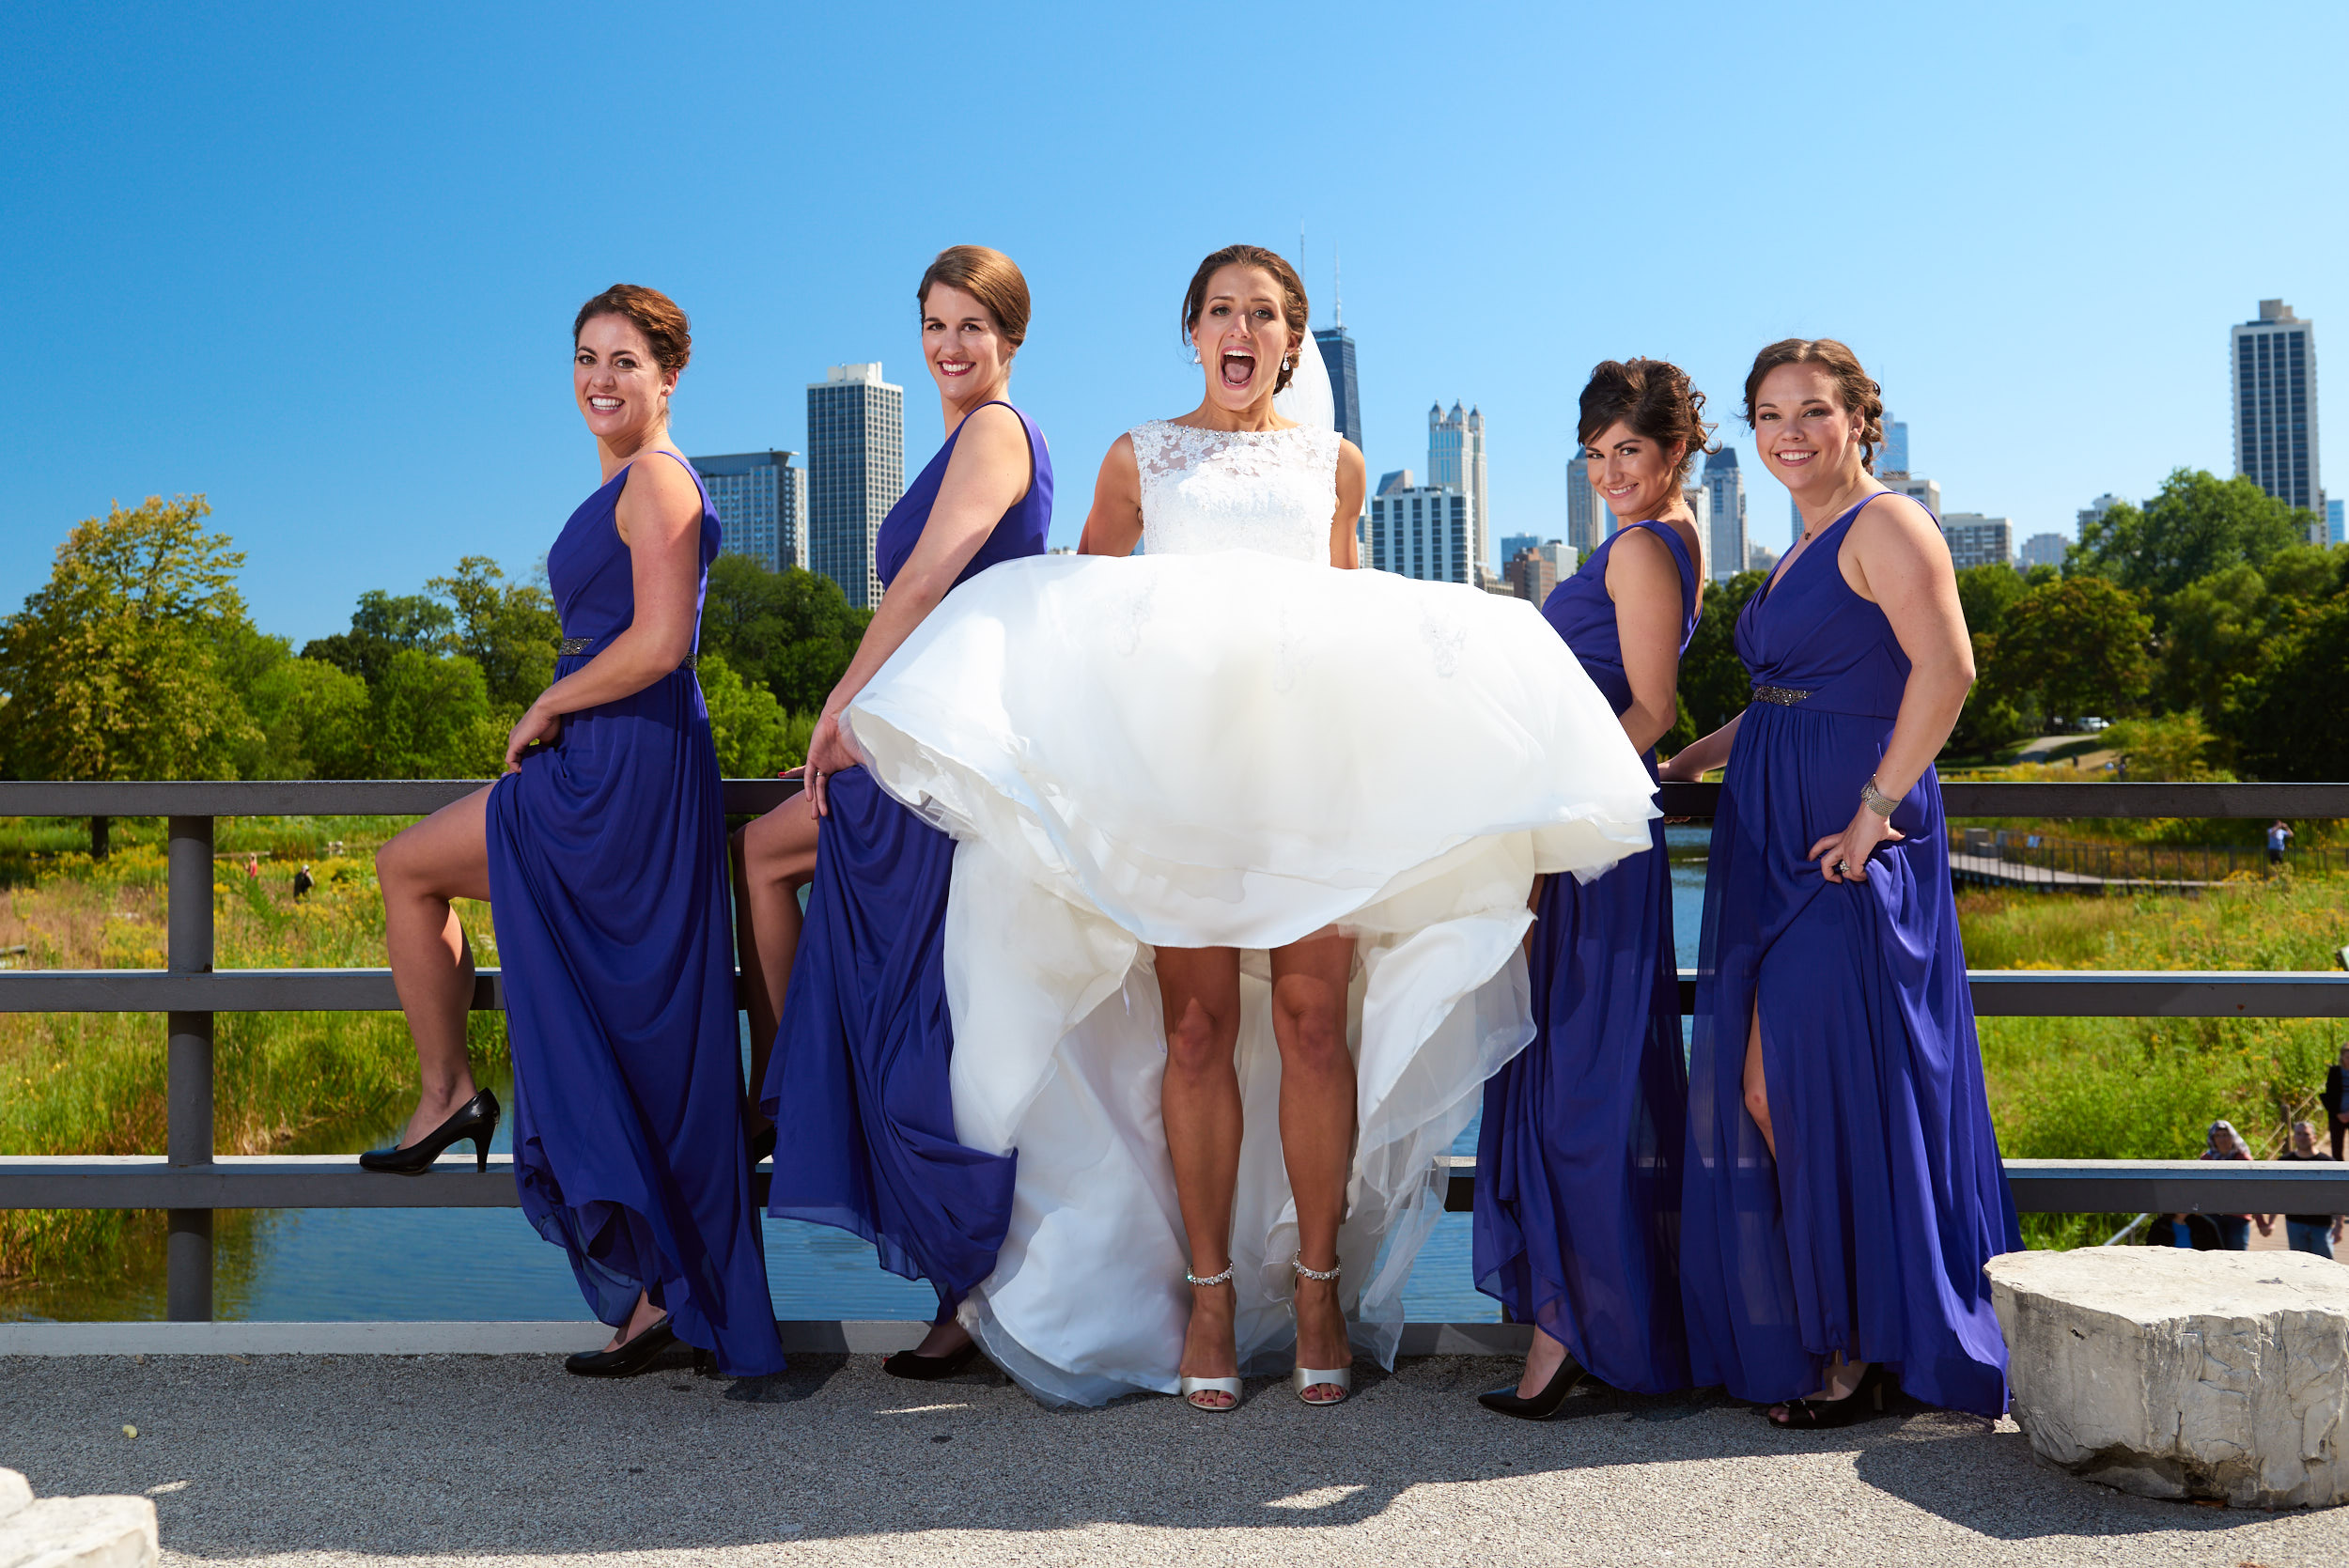 Jumping bride with bridesmaids